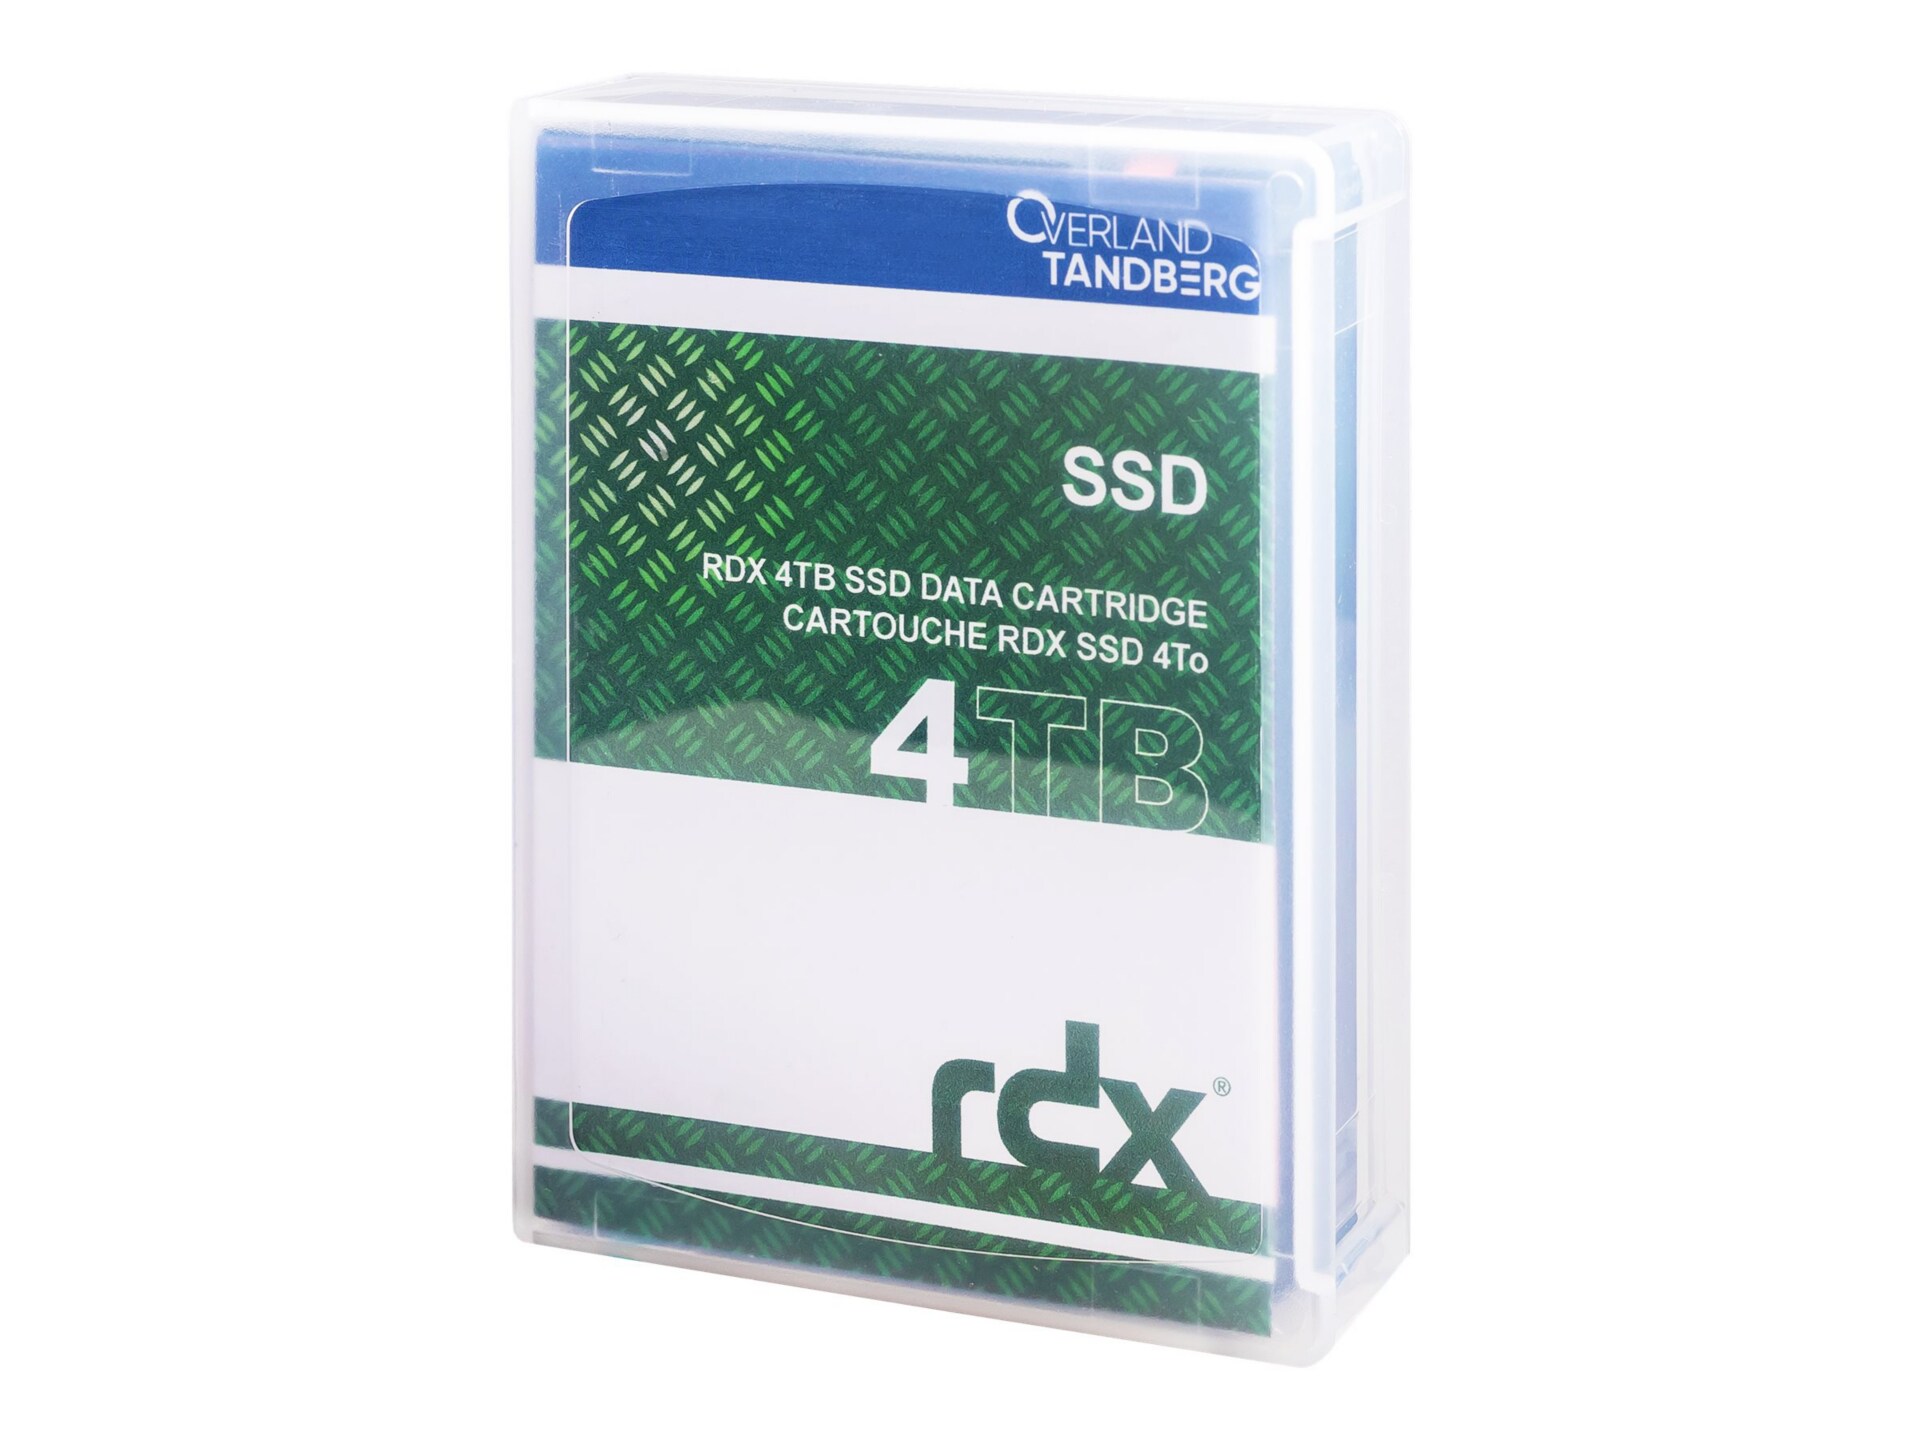 Overland-Tandberg - cartouche RDX SSD x 1 - 4 To - support de stockage